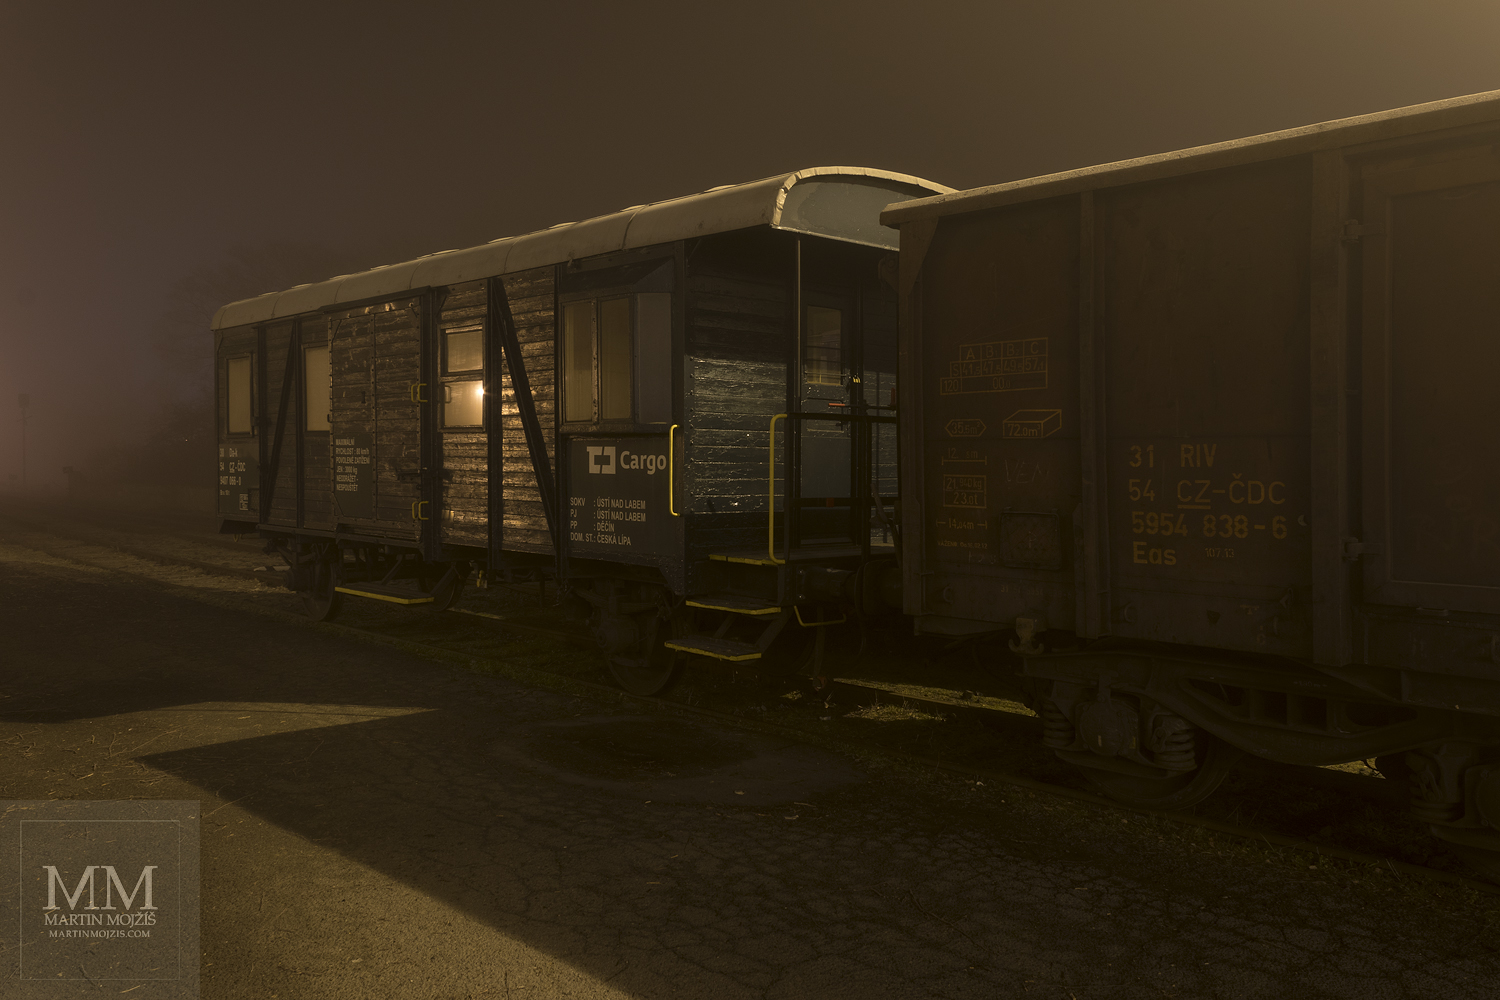 A historic wooden railroad car. Railway station Ceska Lipa.